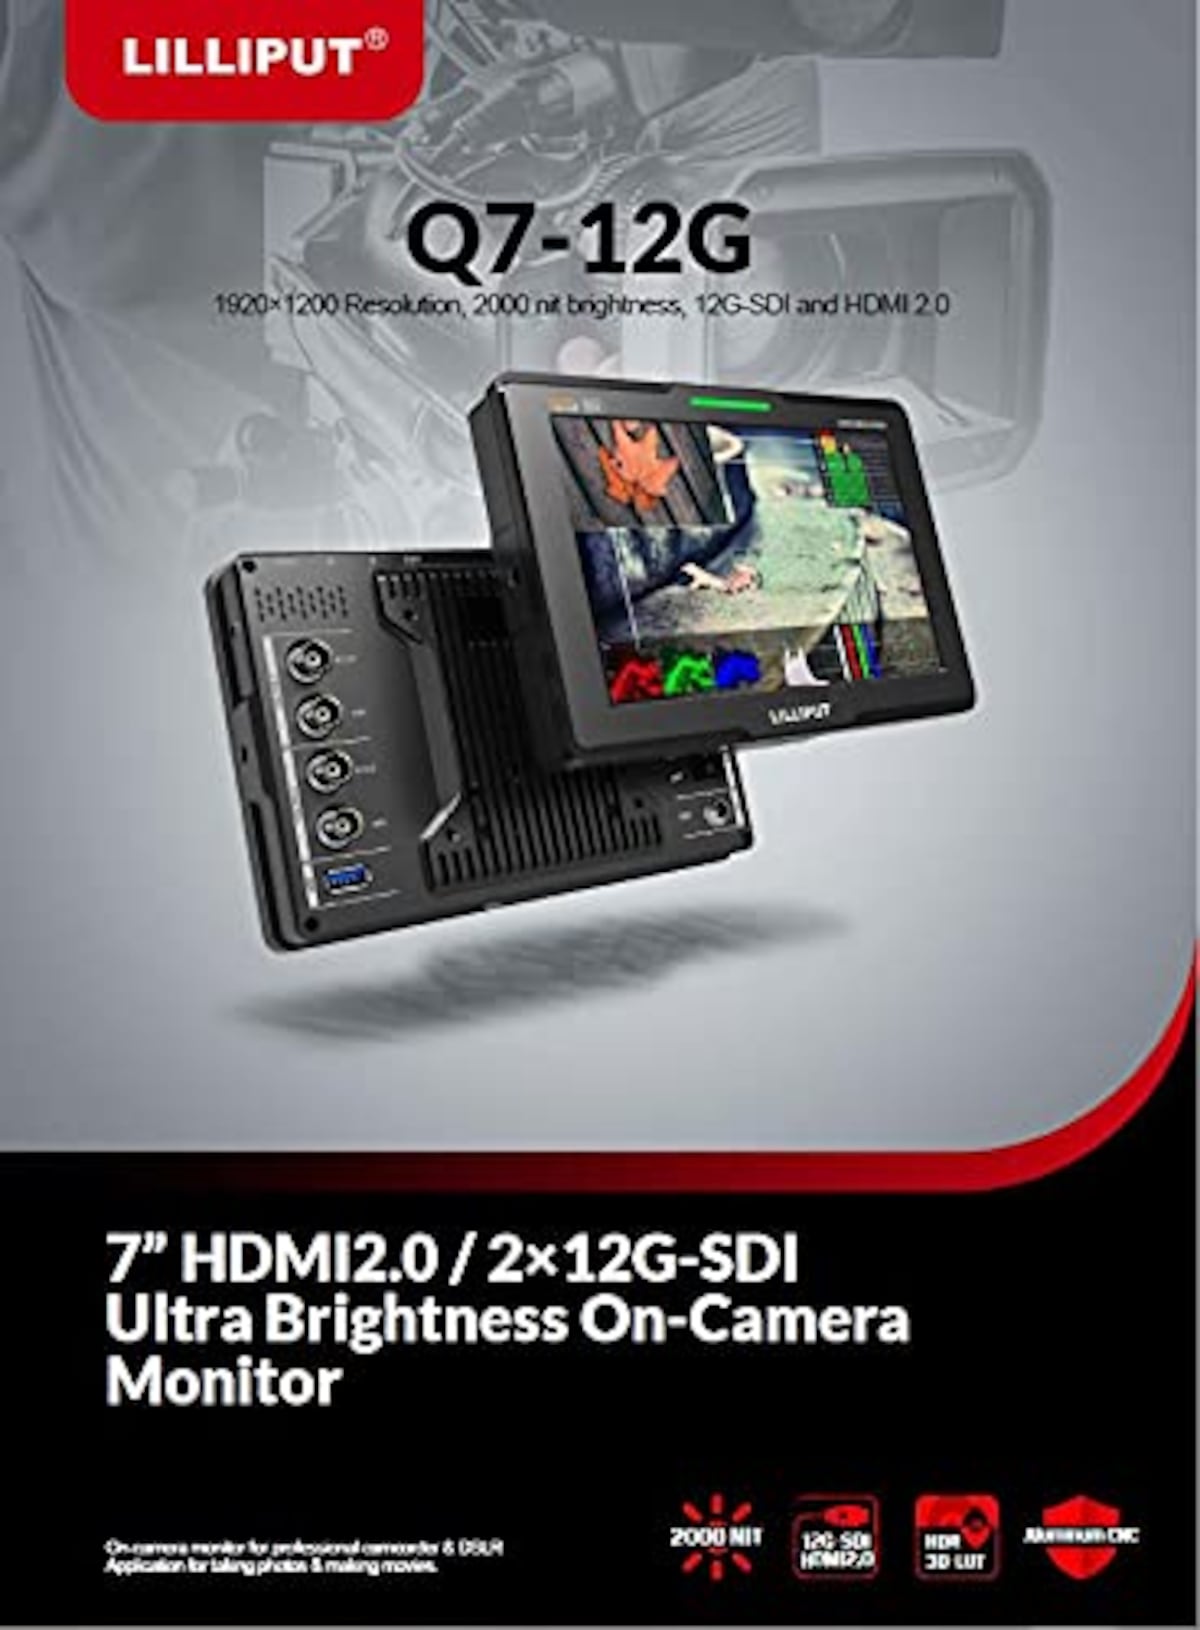  Lilliput Q7-12G / FHD 12G-SDI | HDMI 2.0 Camera-On Monitor画像7 